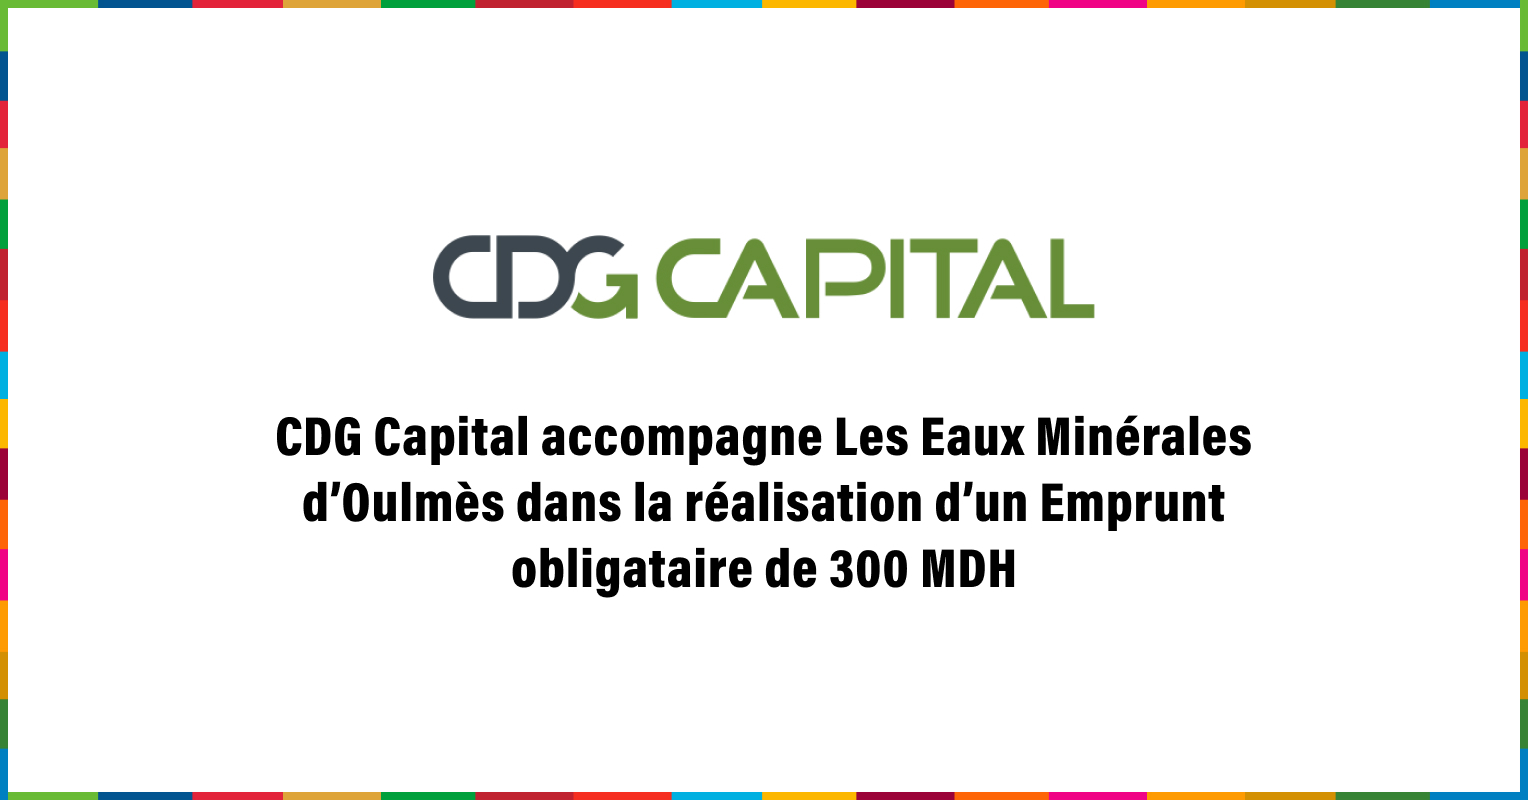 CDG capital